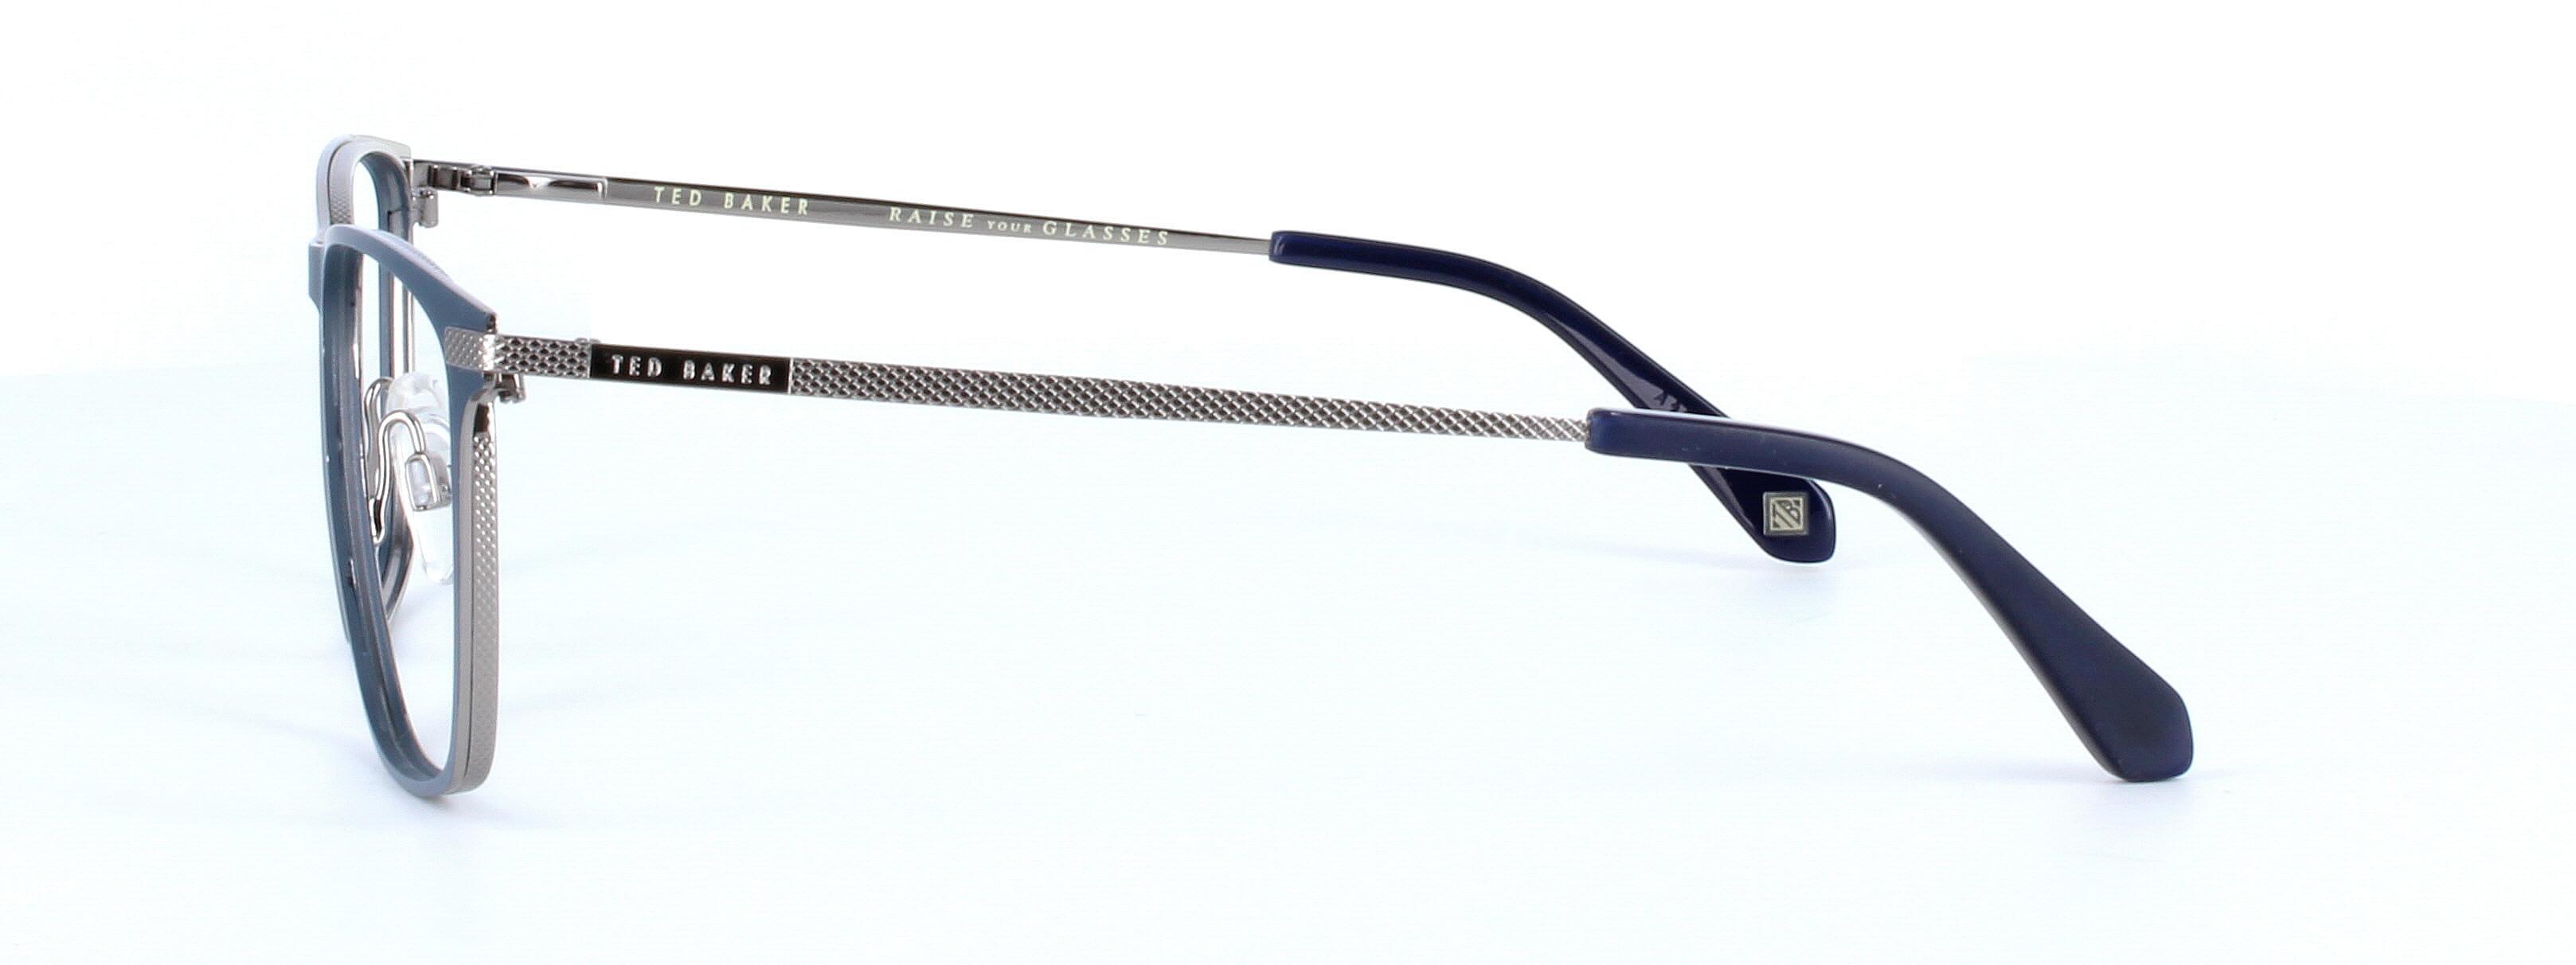 Ted Baker 4276 - Unisex designer metal glasses frame - blue and silver - image view 2